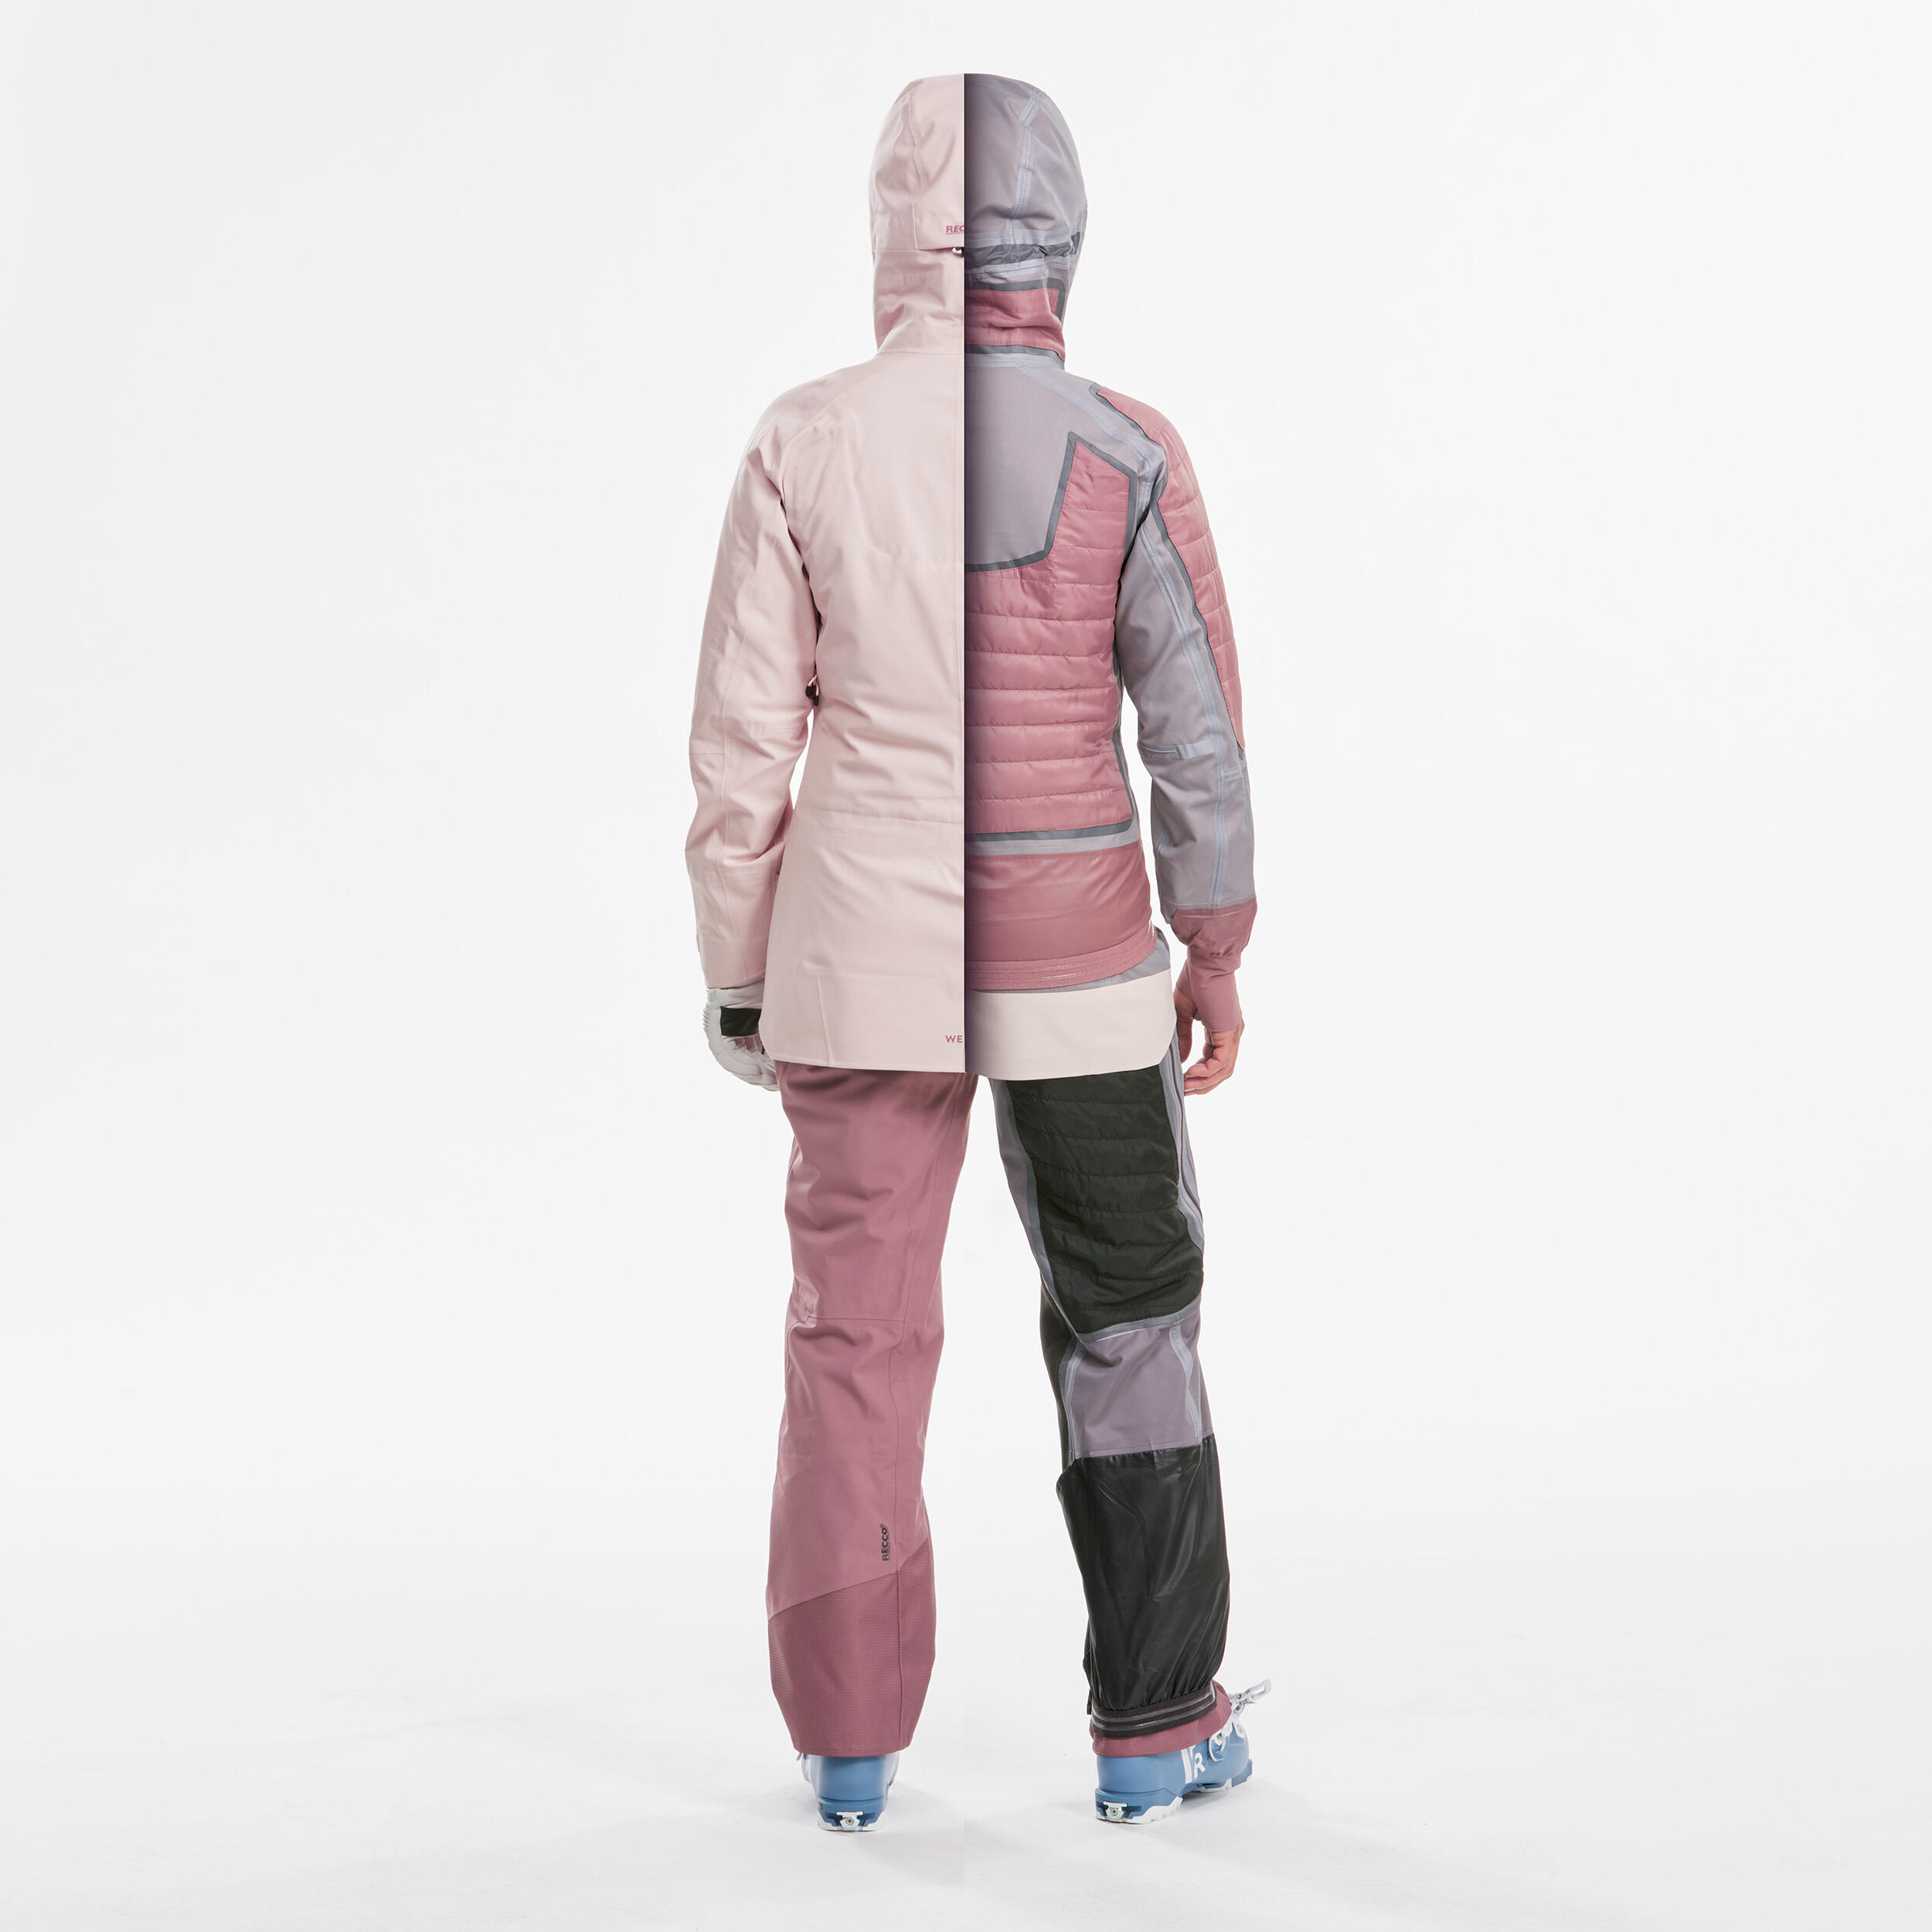 Pantalon de ski femme – FR 500 rose - WEDZE